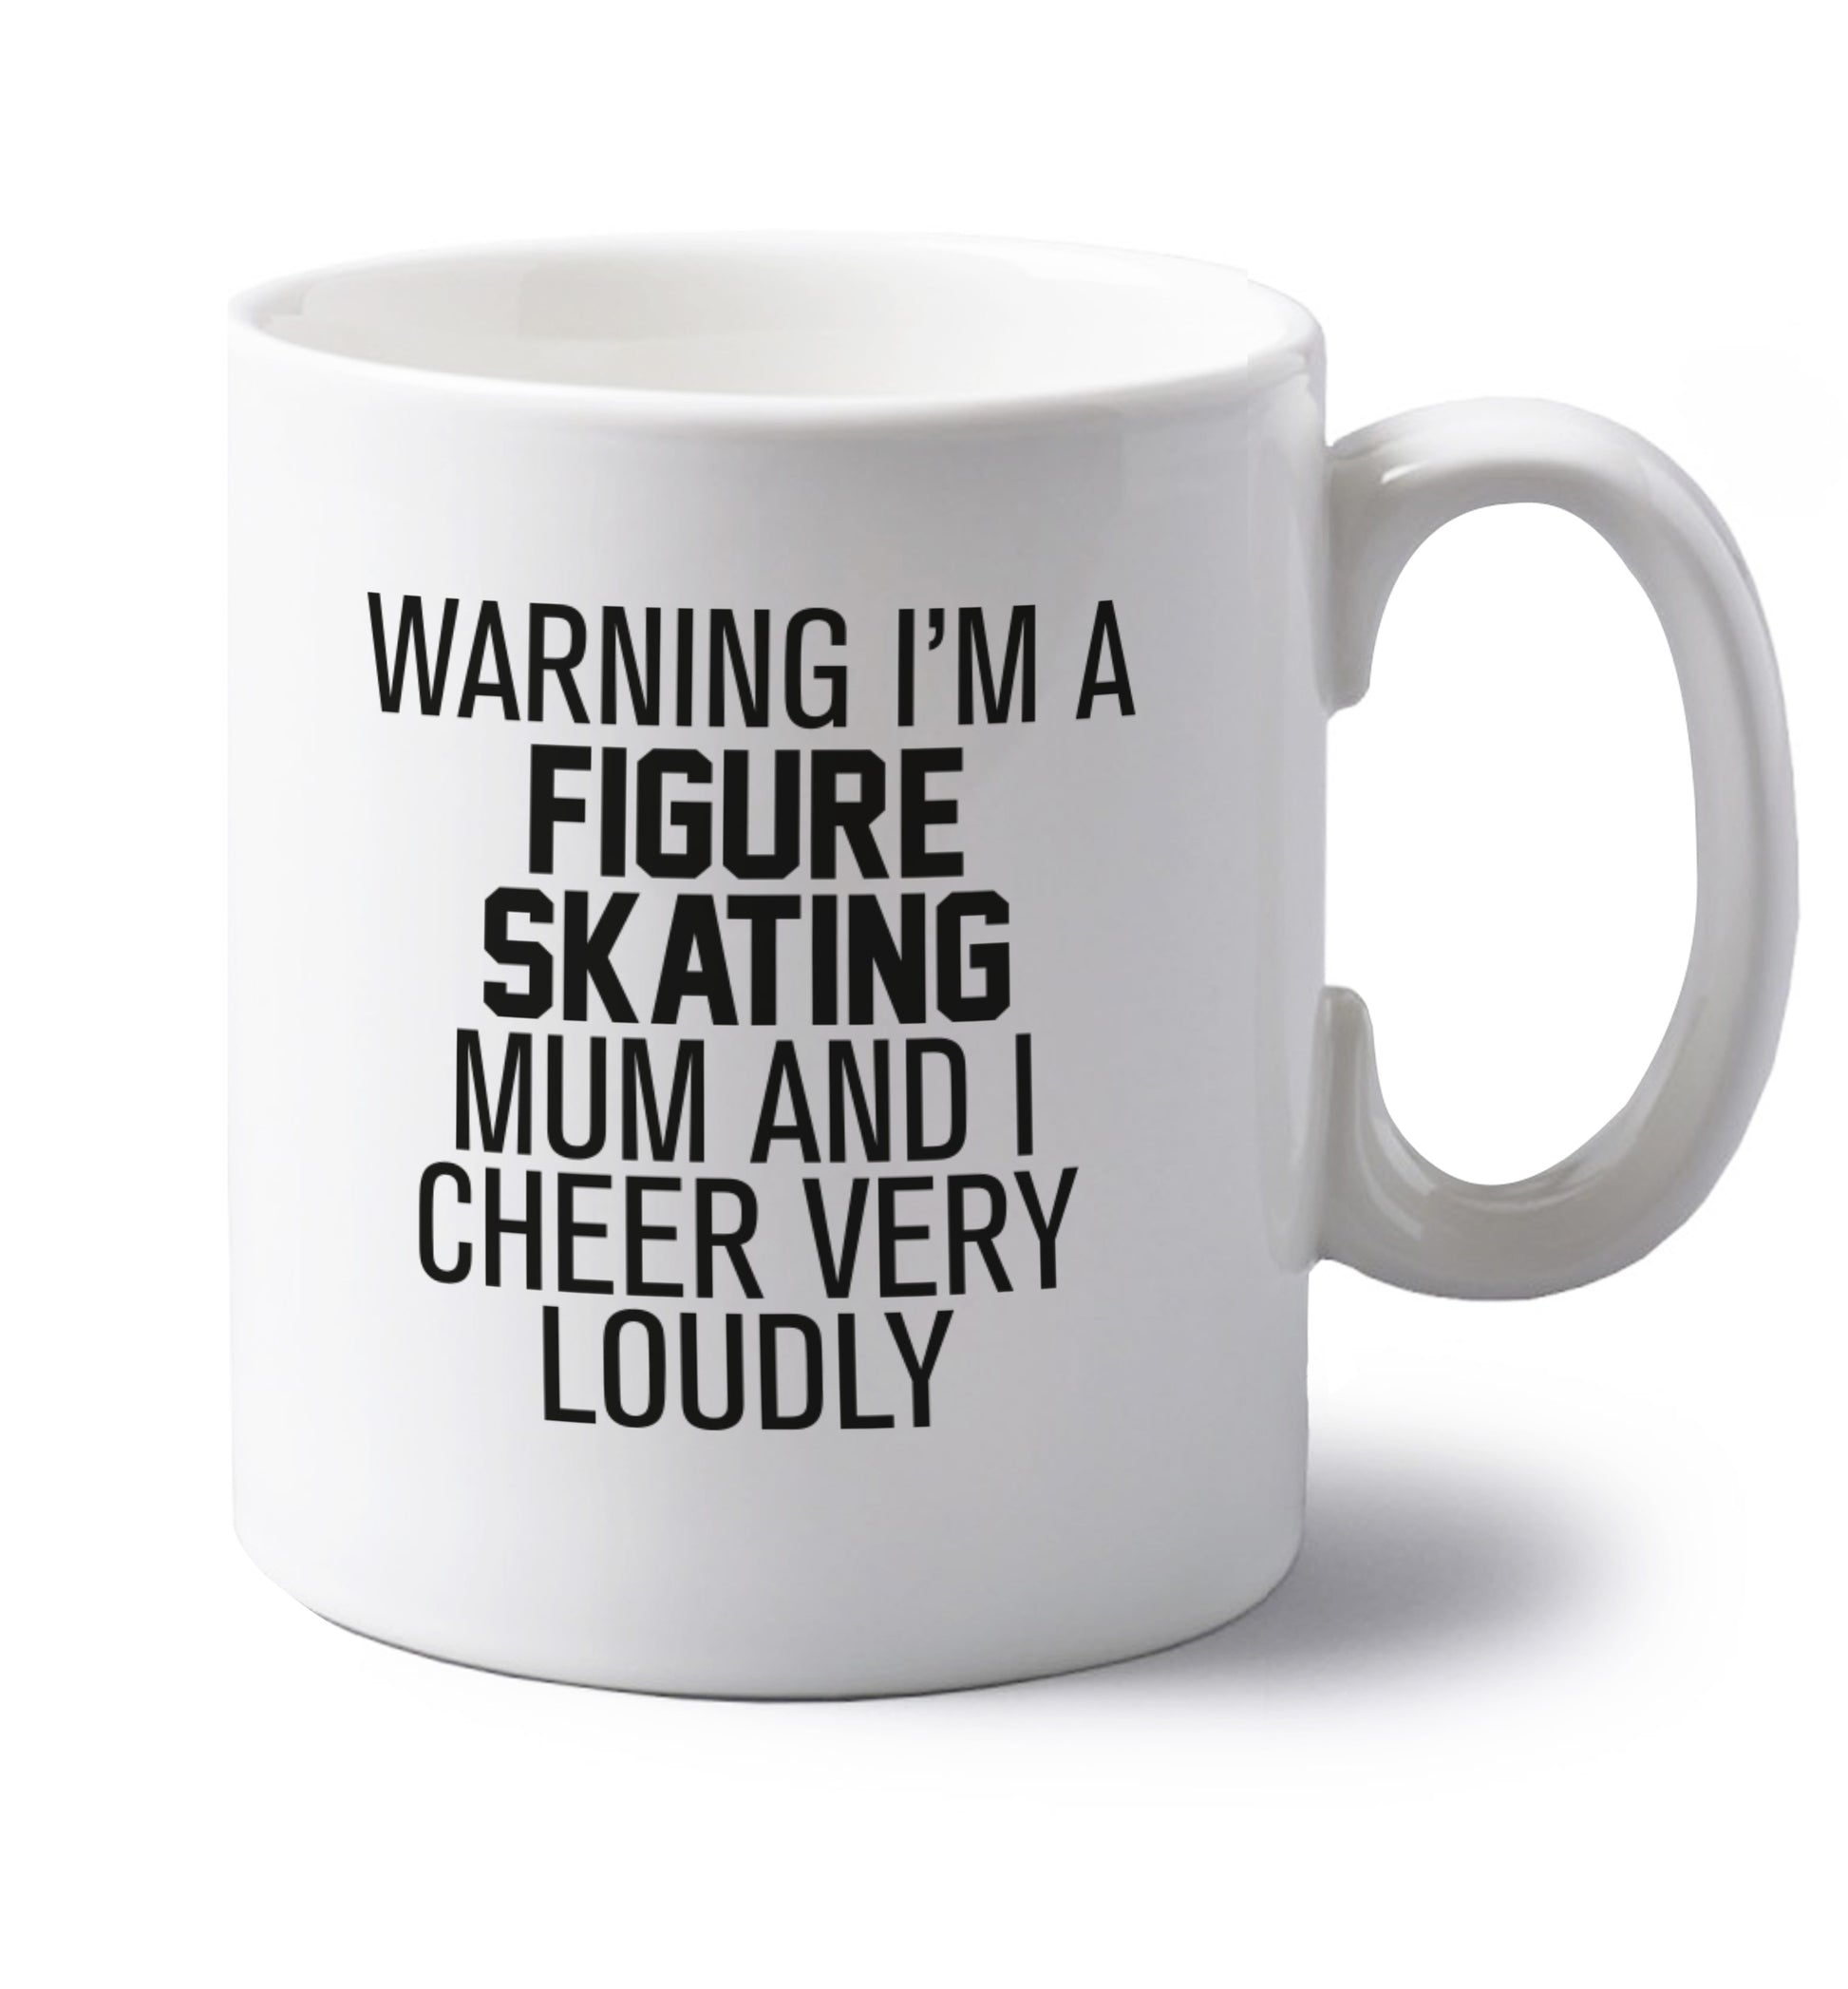 Warning I'm a figure skating mum and I cheer very loudly left handed white ceramic mug 